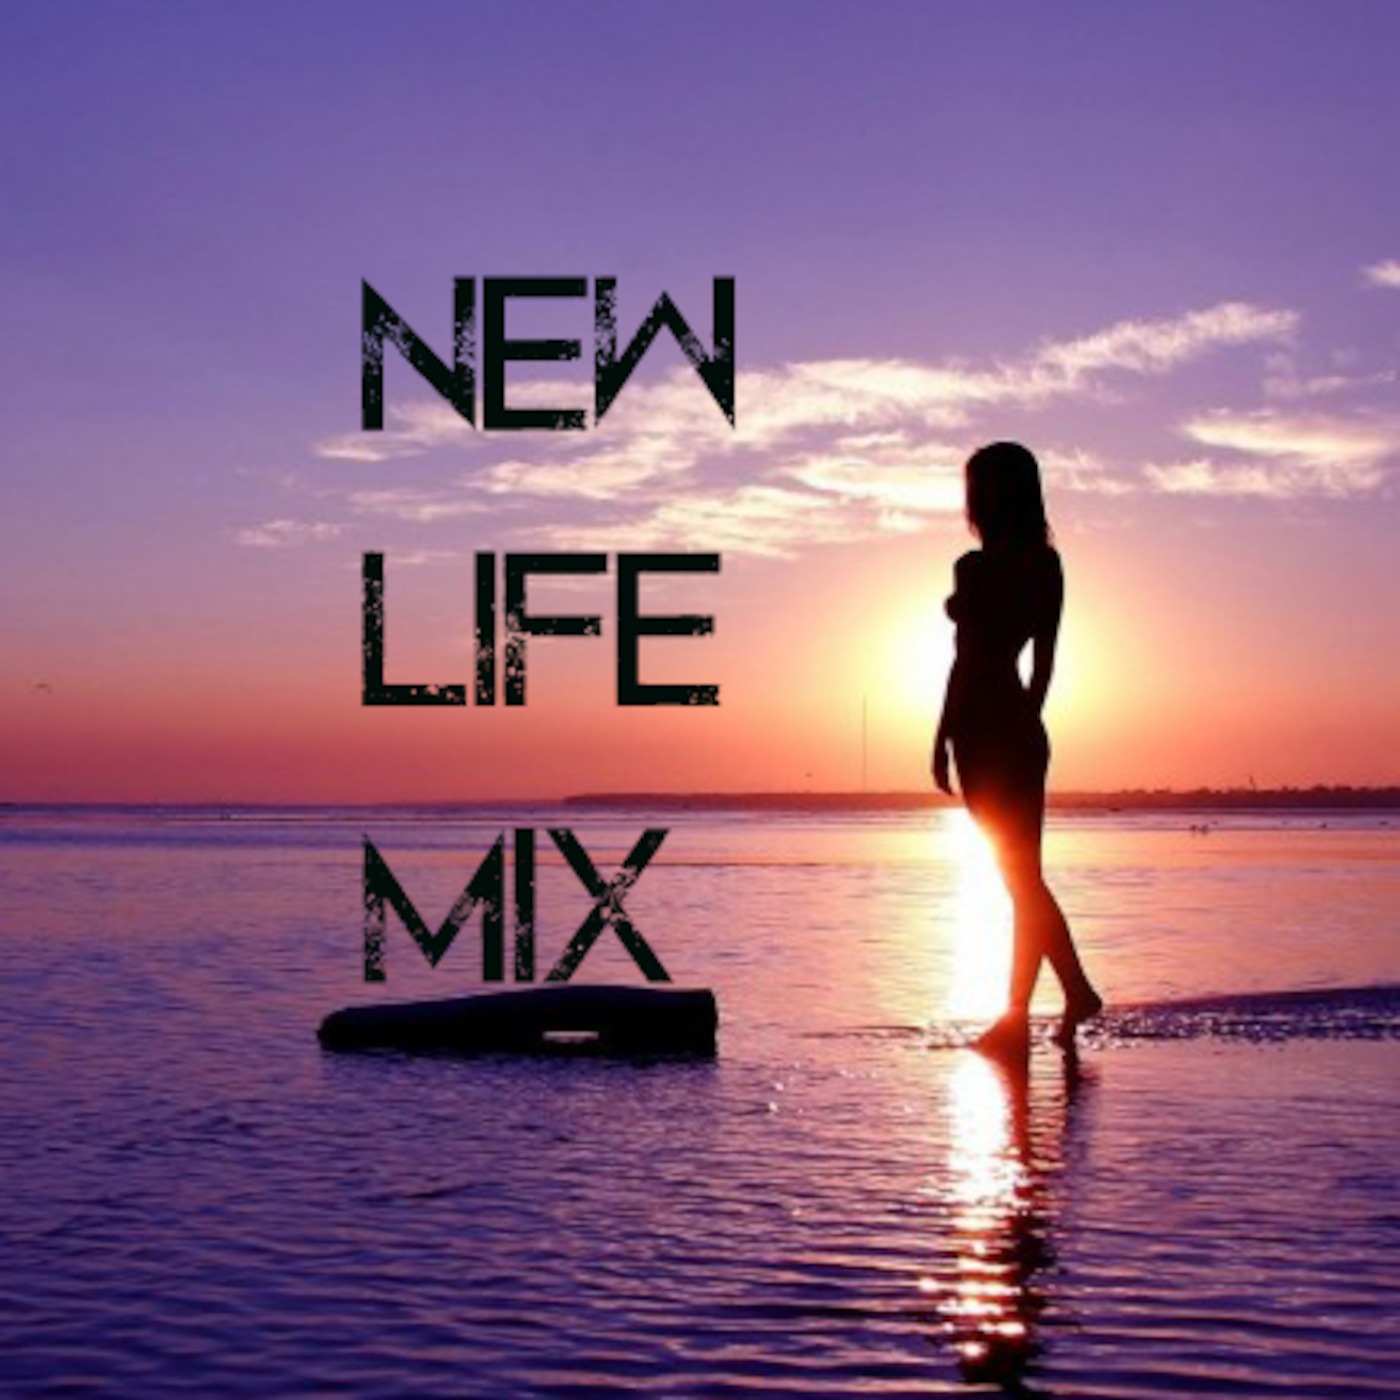 Its new life. The New Life. New Life картинки. New Life аватарка. New Life надпись.